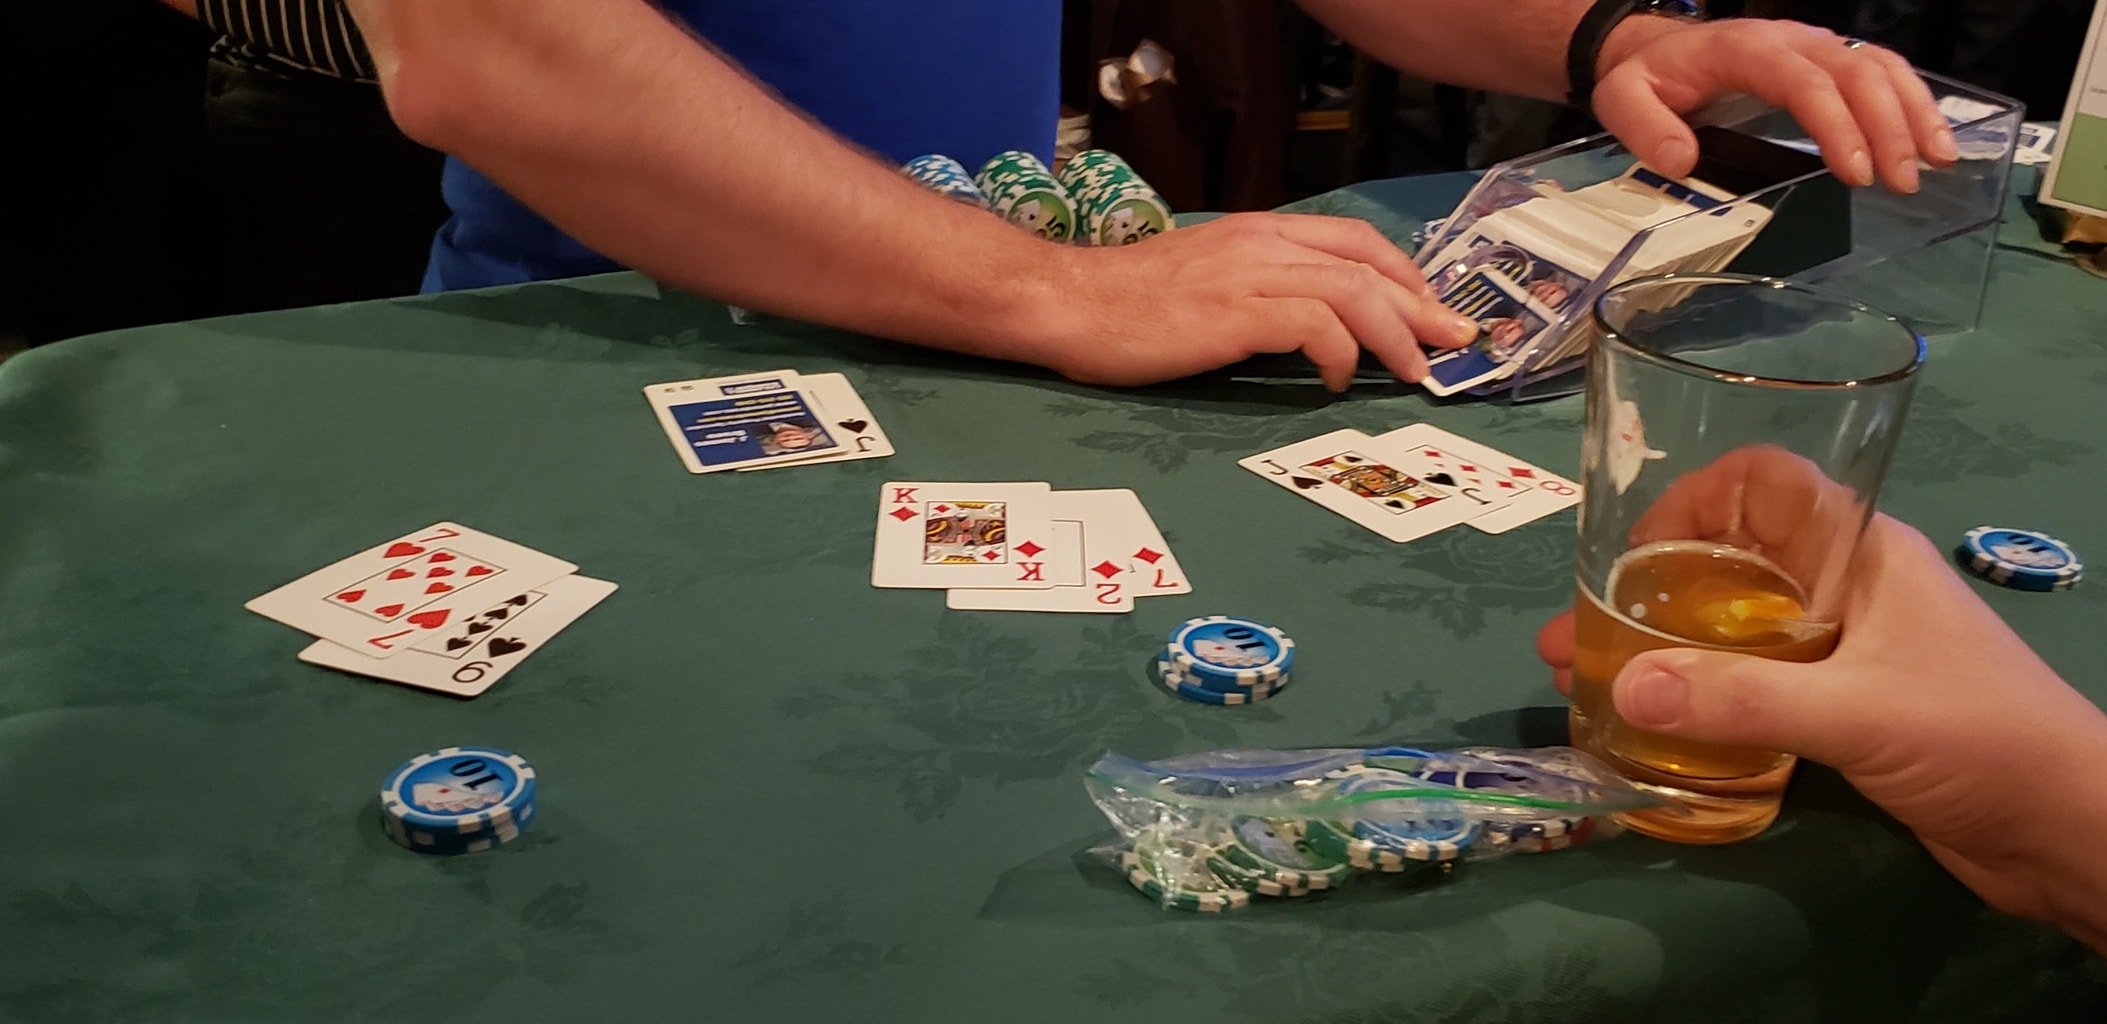 2019 Spring Casino Night Poker Dealing